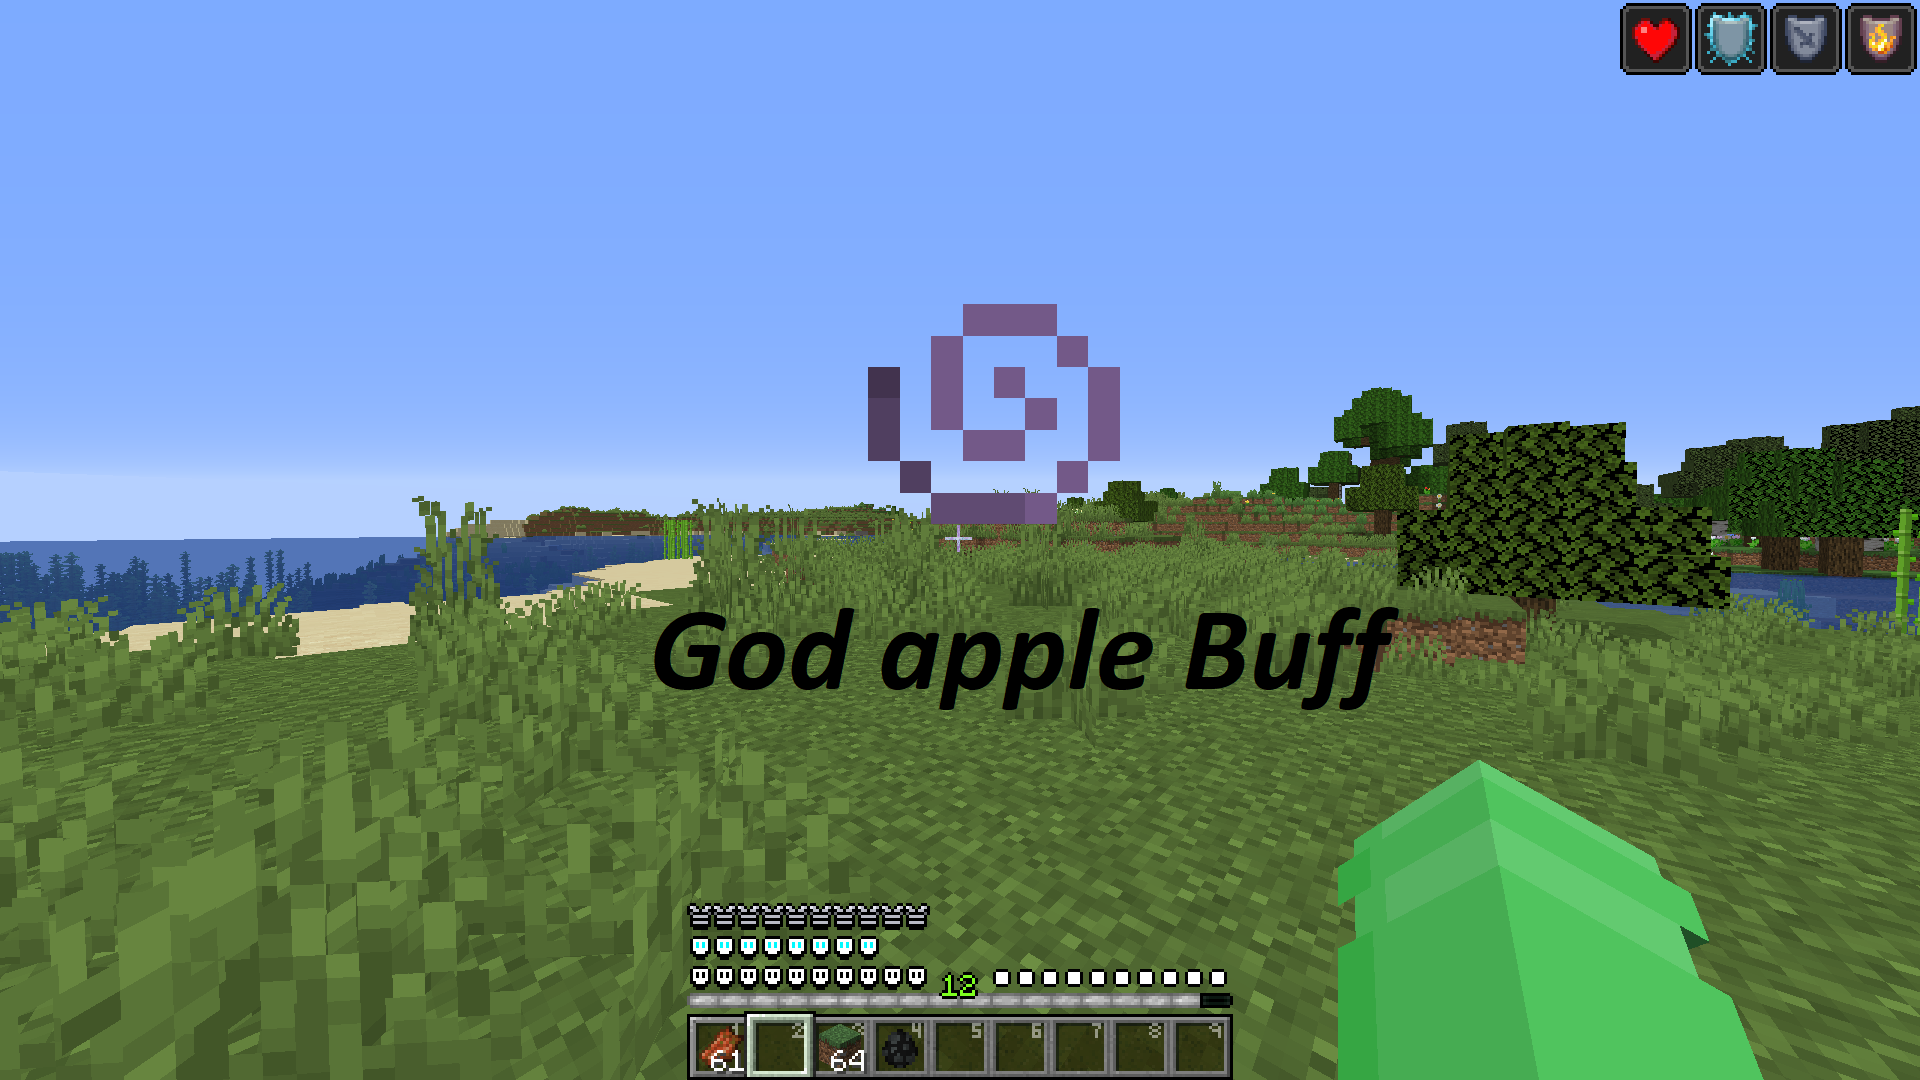 Gui and god apple buff